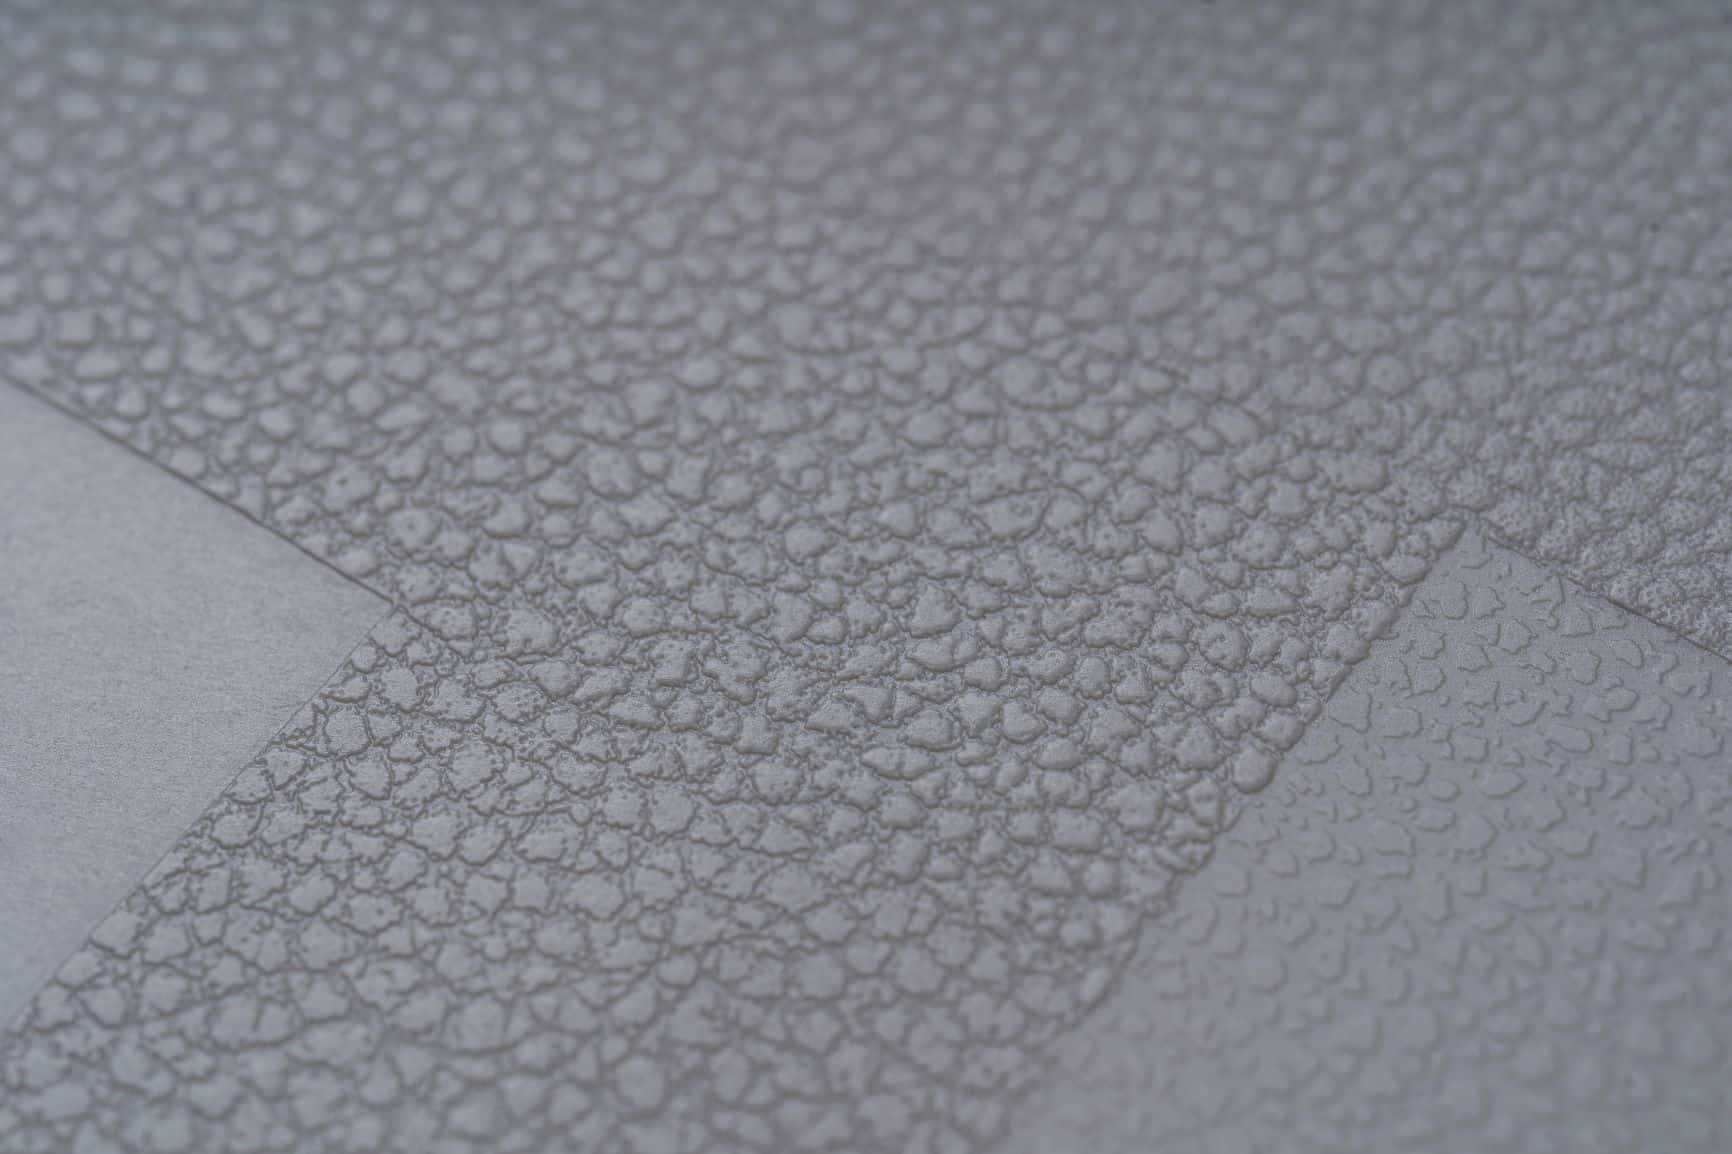 SoForm Class A Surface Material Copyright by Asahi Kasei 1 Asahi Kasei